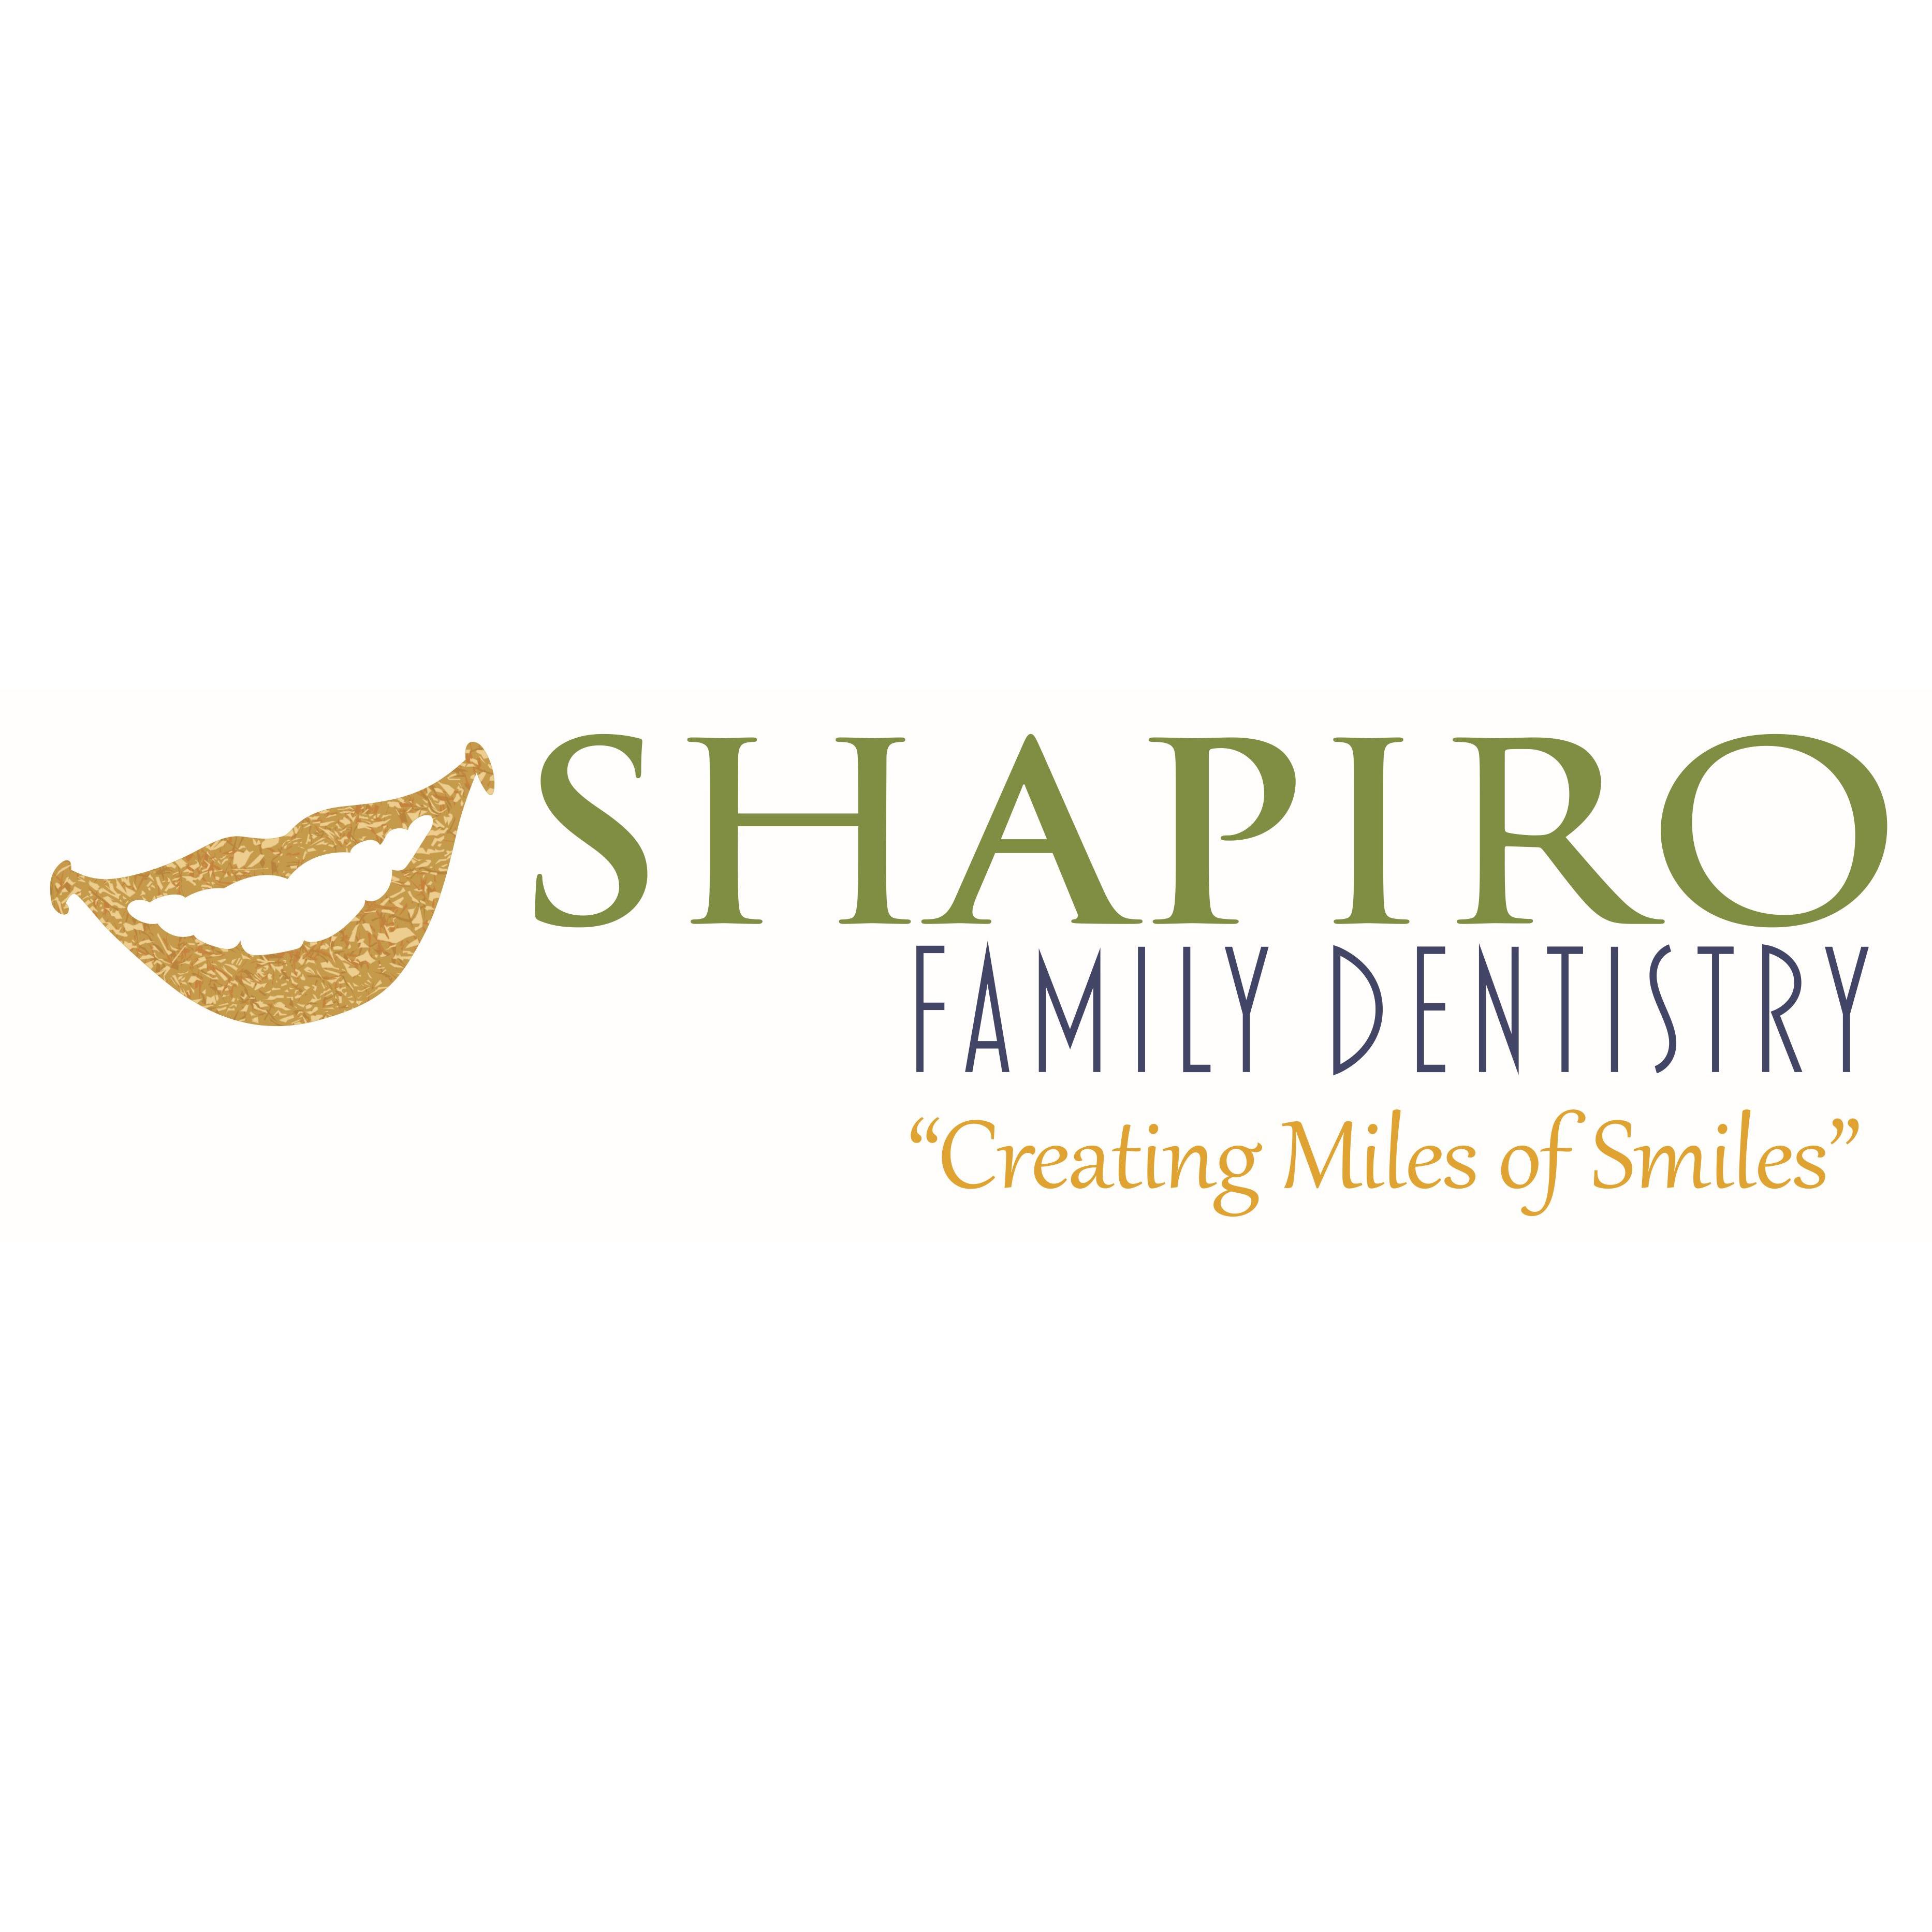 Shapiro Family Dentistry of Fort Pierce - Fort Pierce, FL 34982 - (772)242-0053 | ShowMeLocal.com